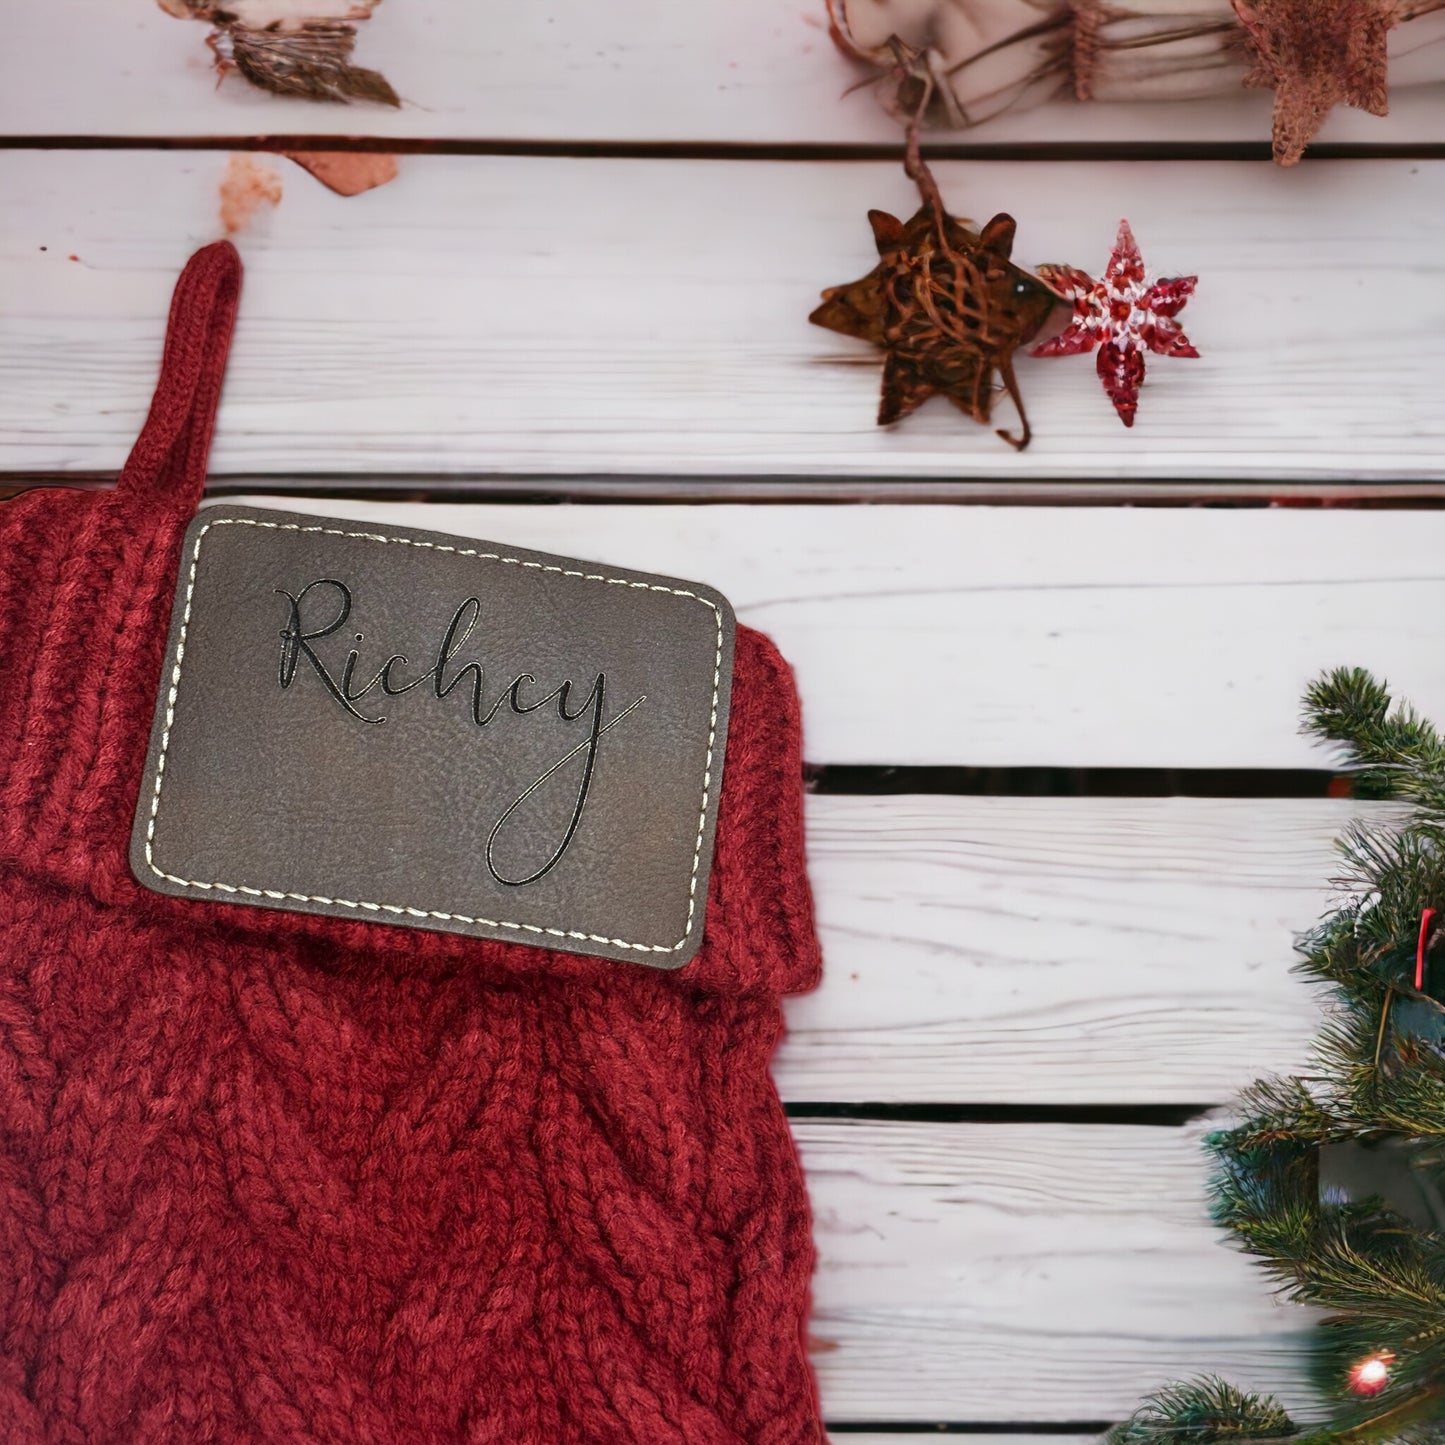 Christmas stockings | Christmas Stockings with Names | Holiday Stockings | Xmas Stockings